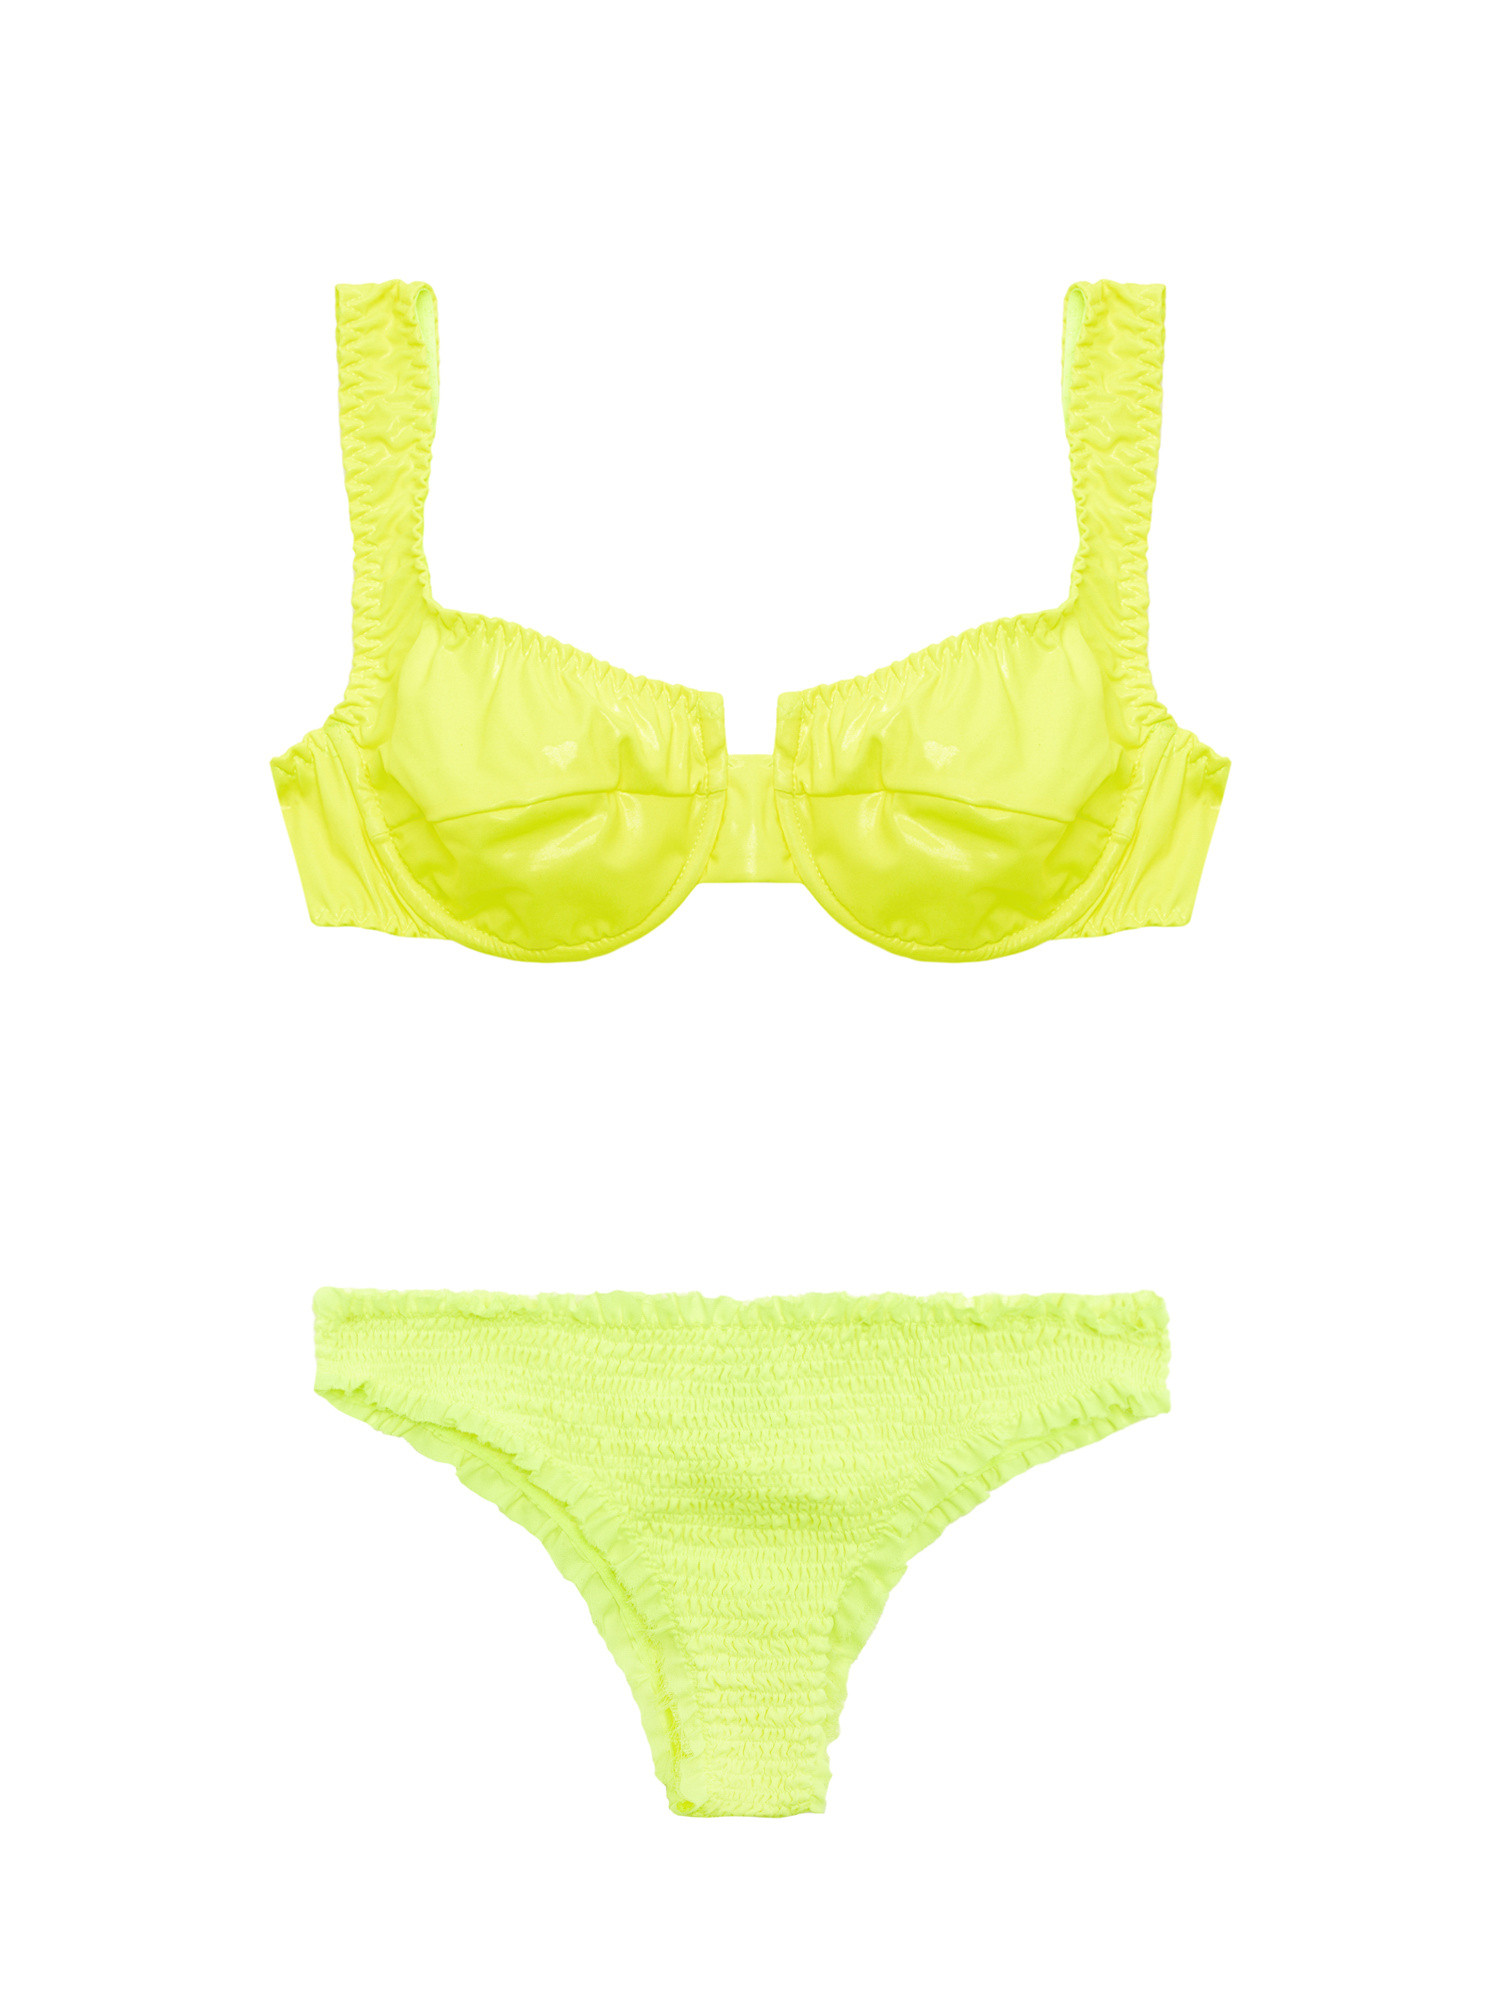 F**K - Bikini with underwire and Brazilian bottom, Yellow, large image number 0